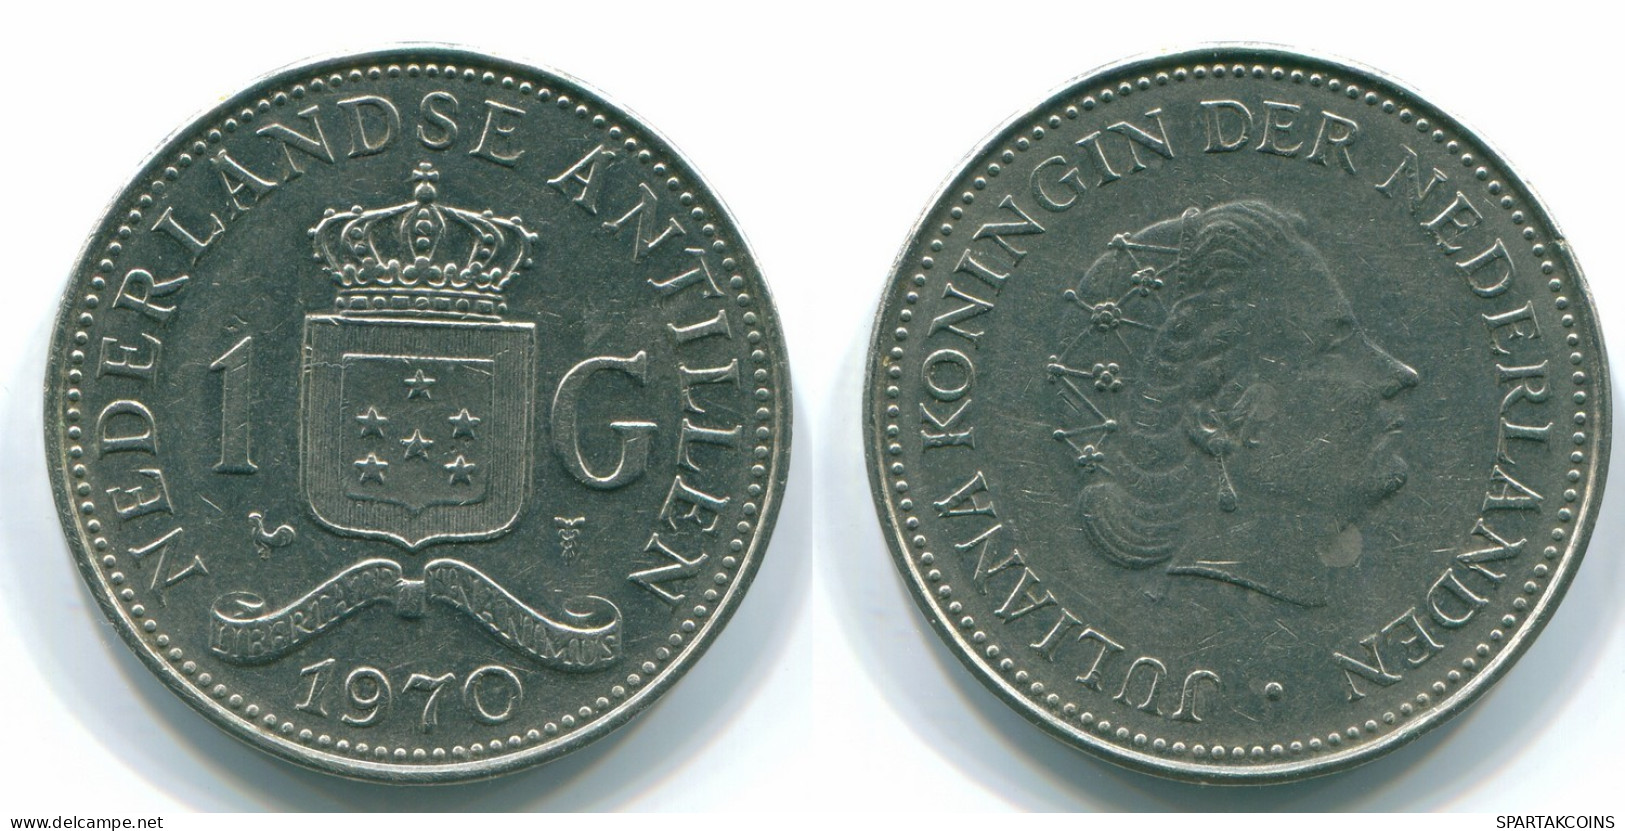 1 GULDEN 1970 NETHERLANDS ANTILLES Nickel Colonial Coin #S11898.U.A - Netherlands Antilles